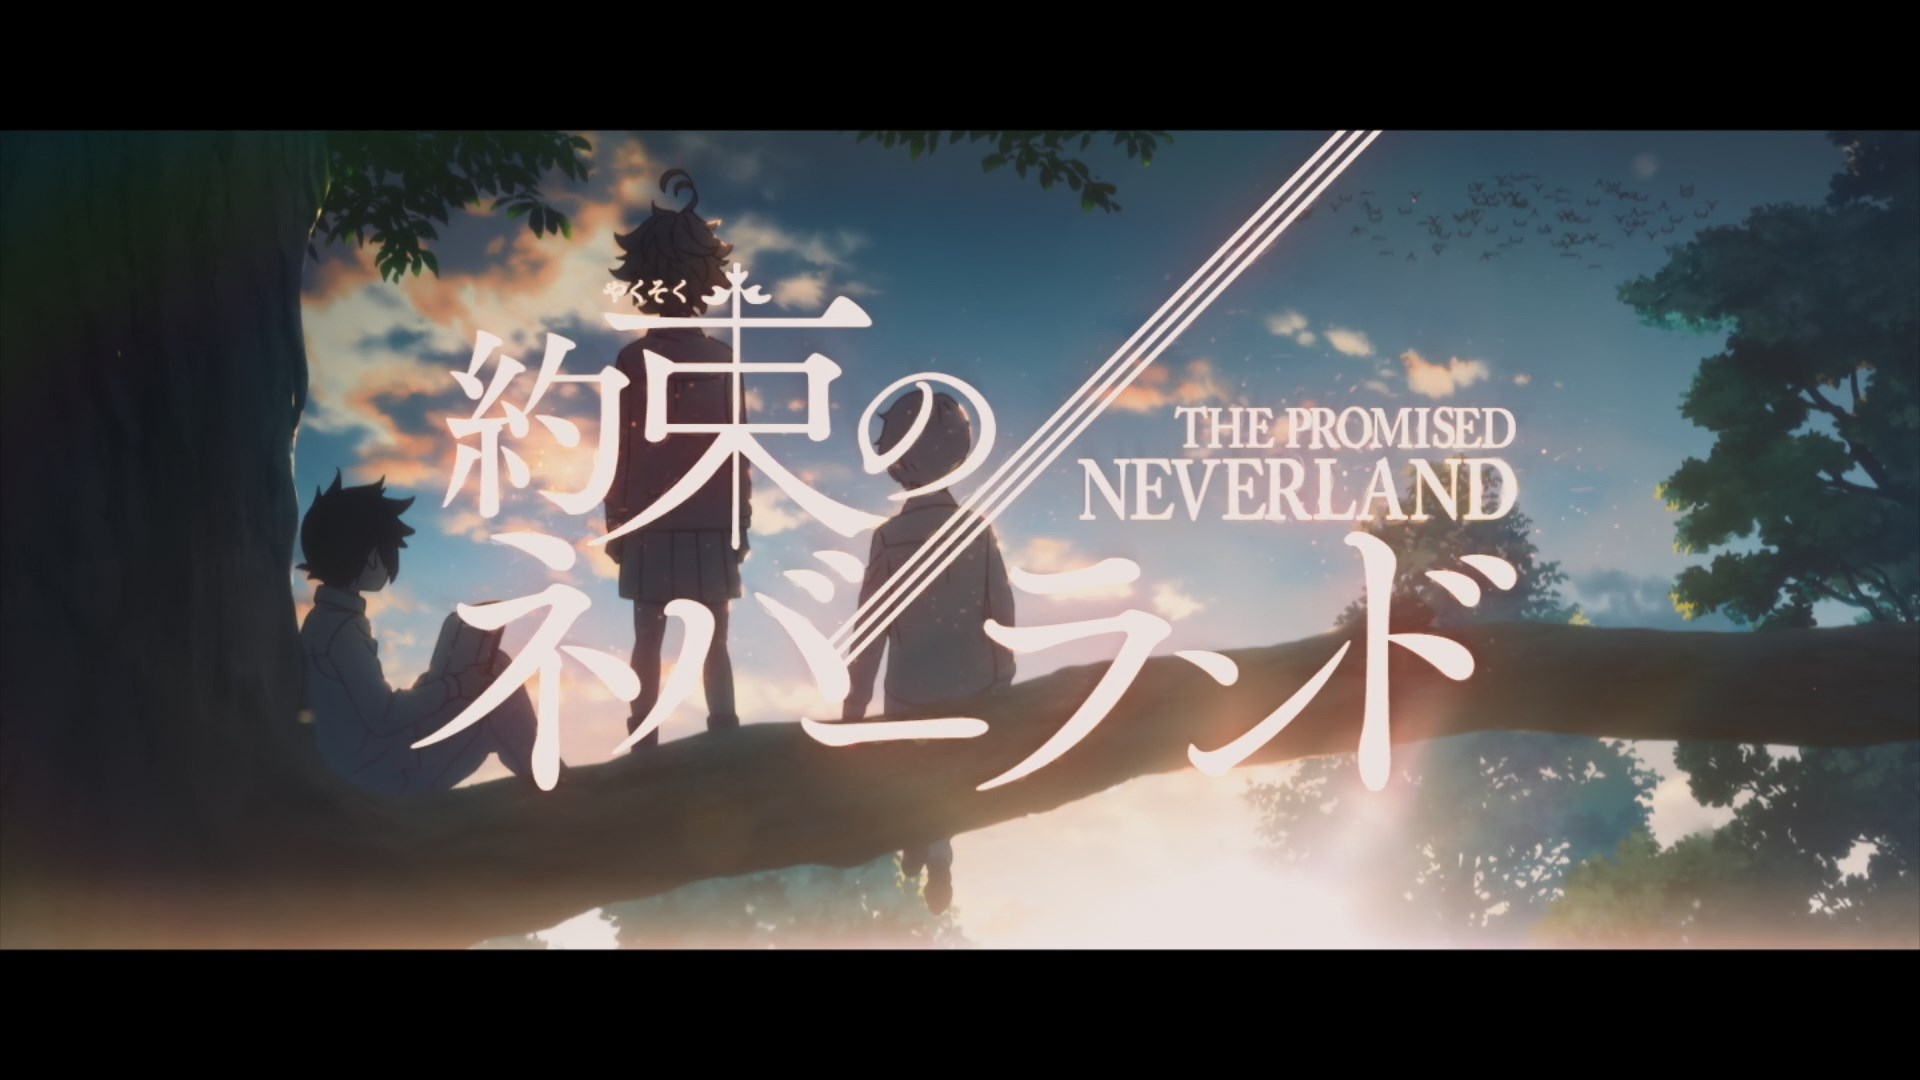 the promised neverland manga wallpaper hd